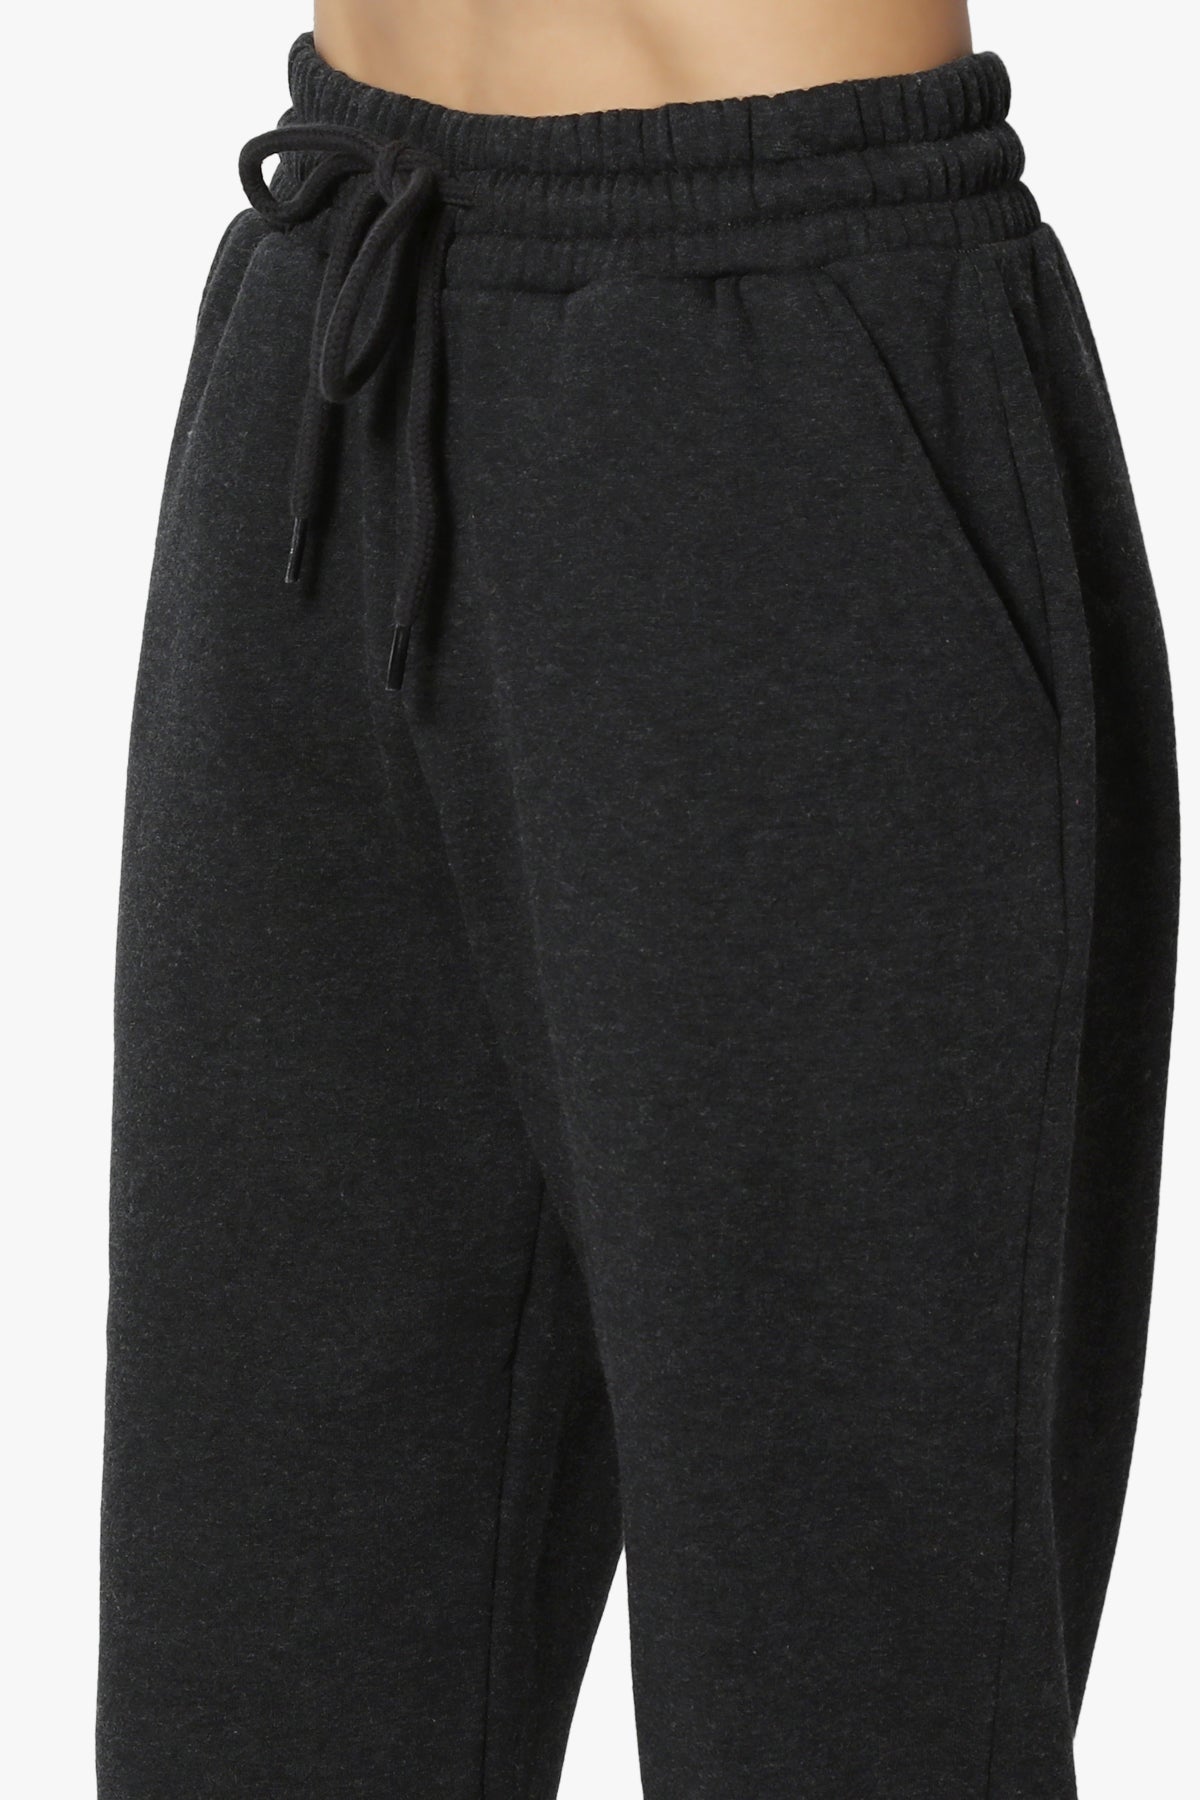 S~3X Lounge FleecePullover Sweatshirt Drawstring Jogger Sweat Pants SET ...